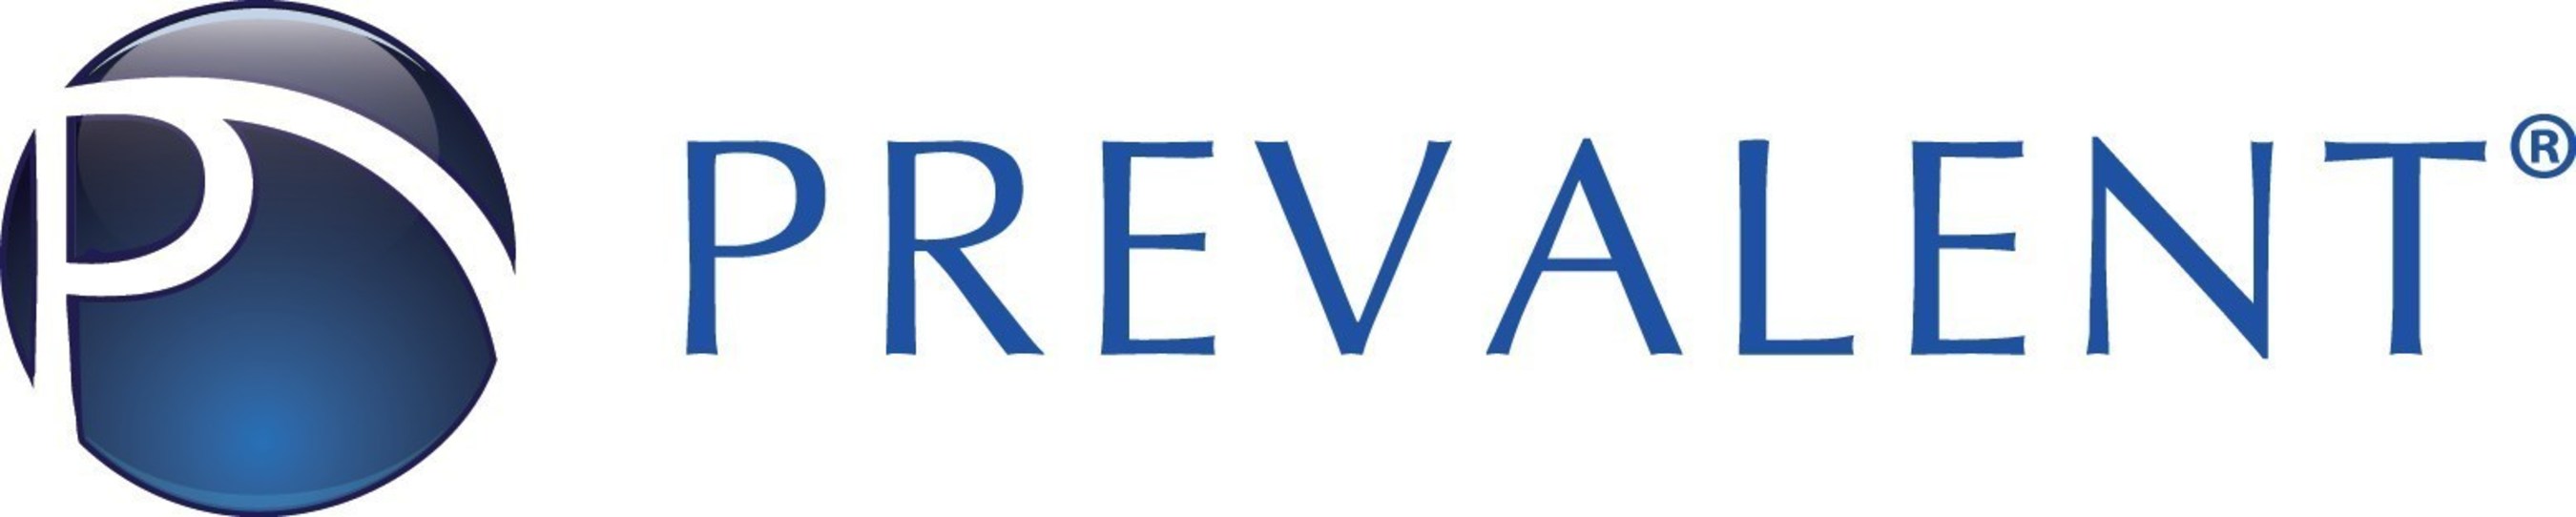 Prevalent Inc. Logo (PRNewsFoto/Prevalent Inc.)